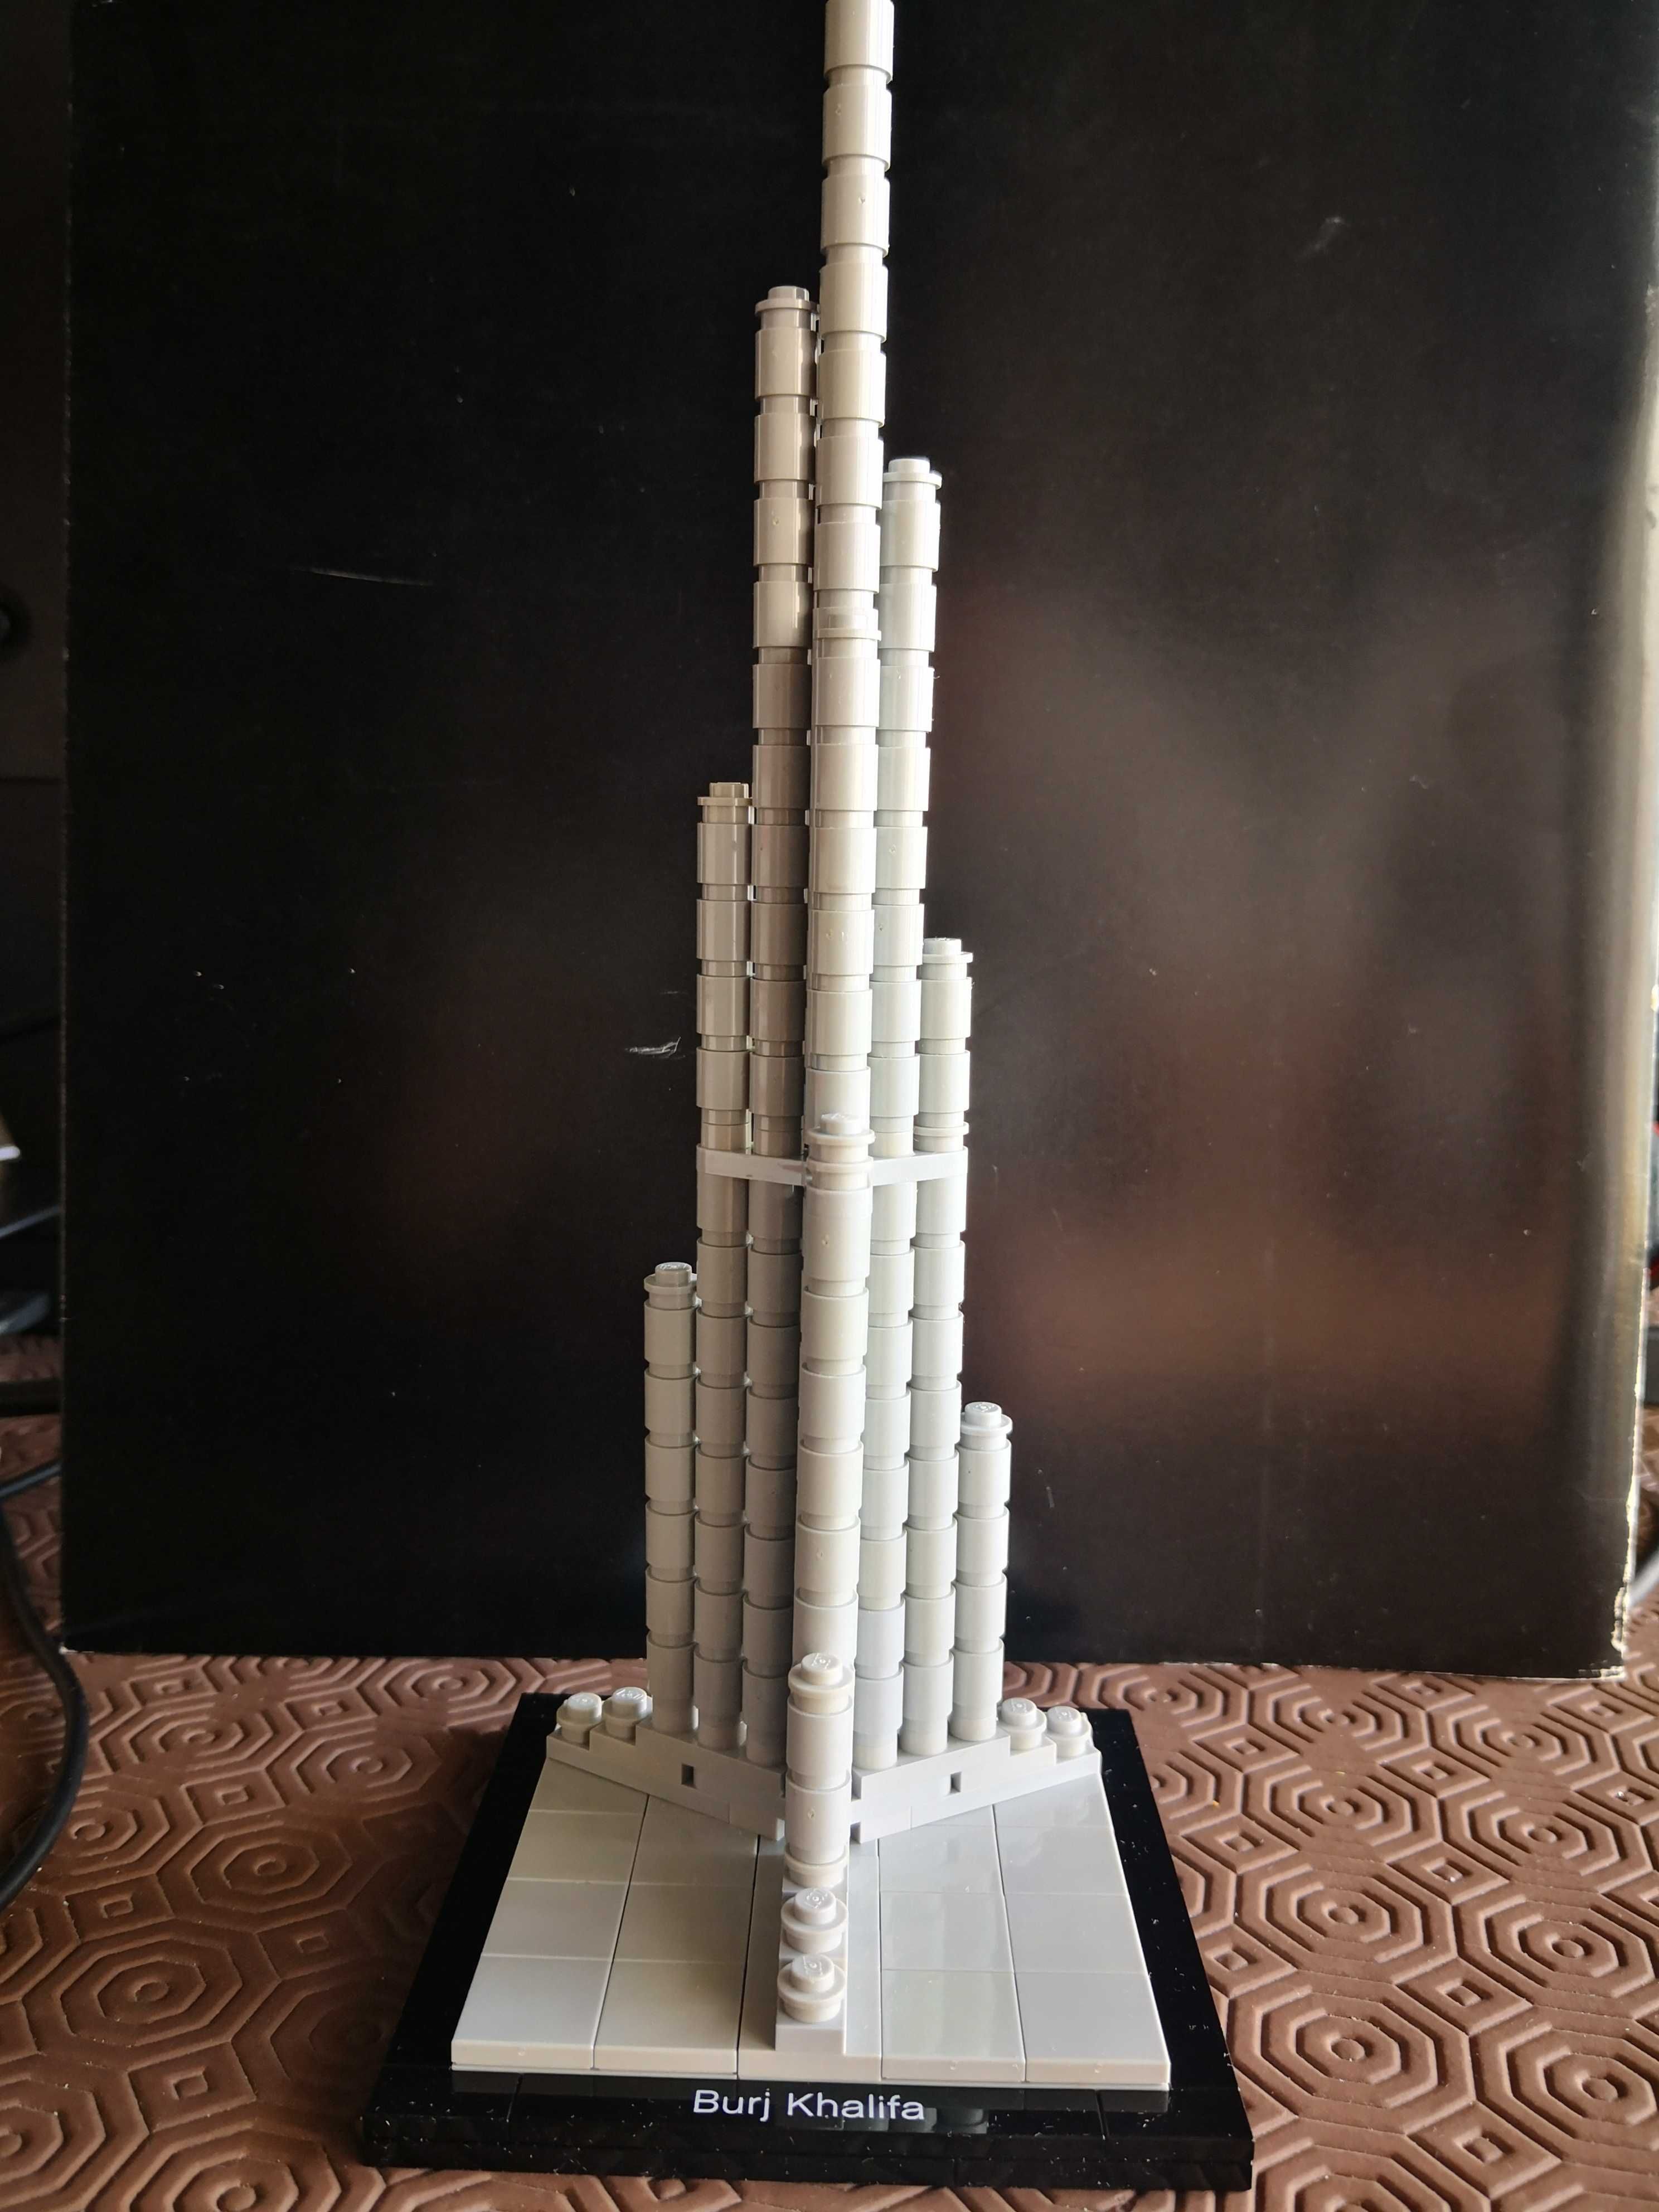 LEGO 21008 Arquitecture *Burj Khalifa*